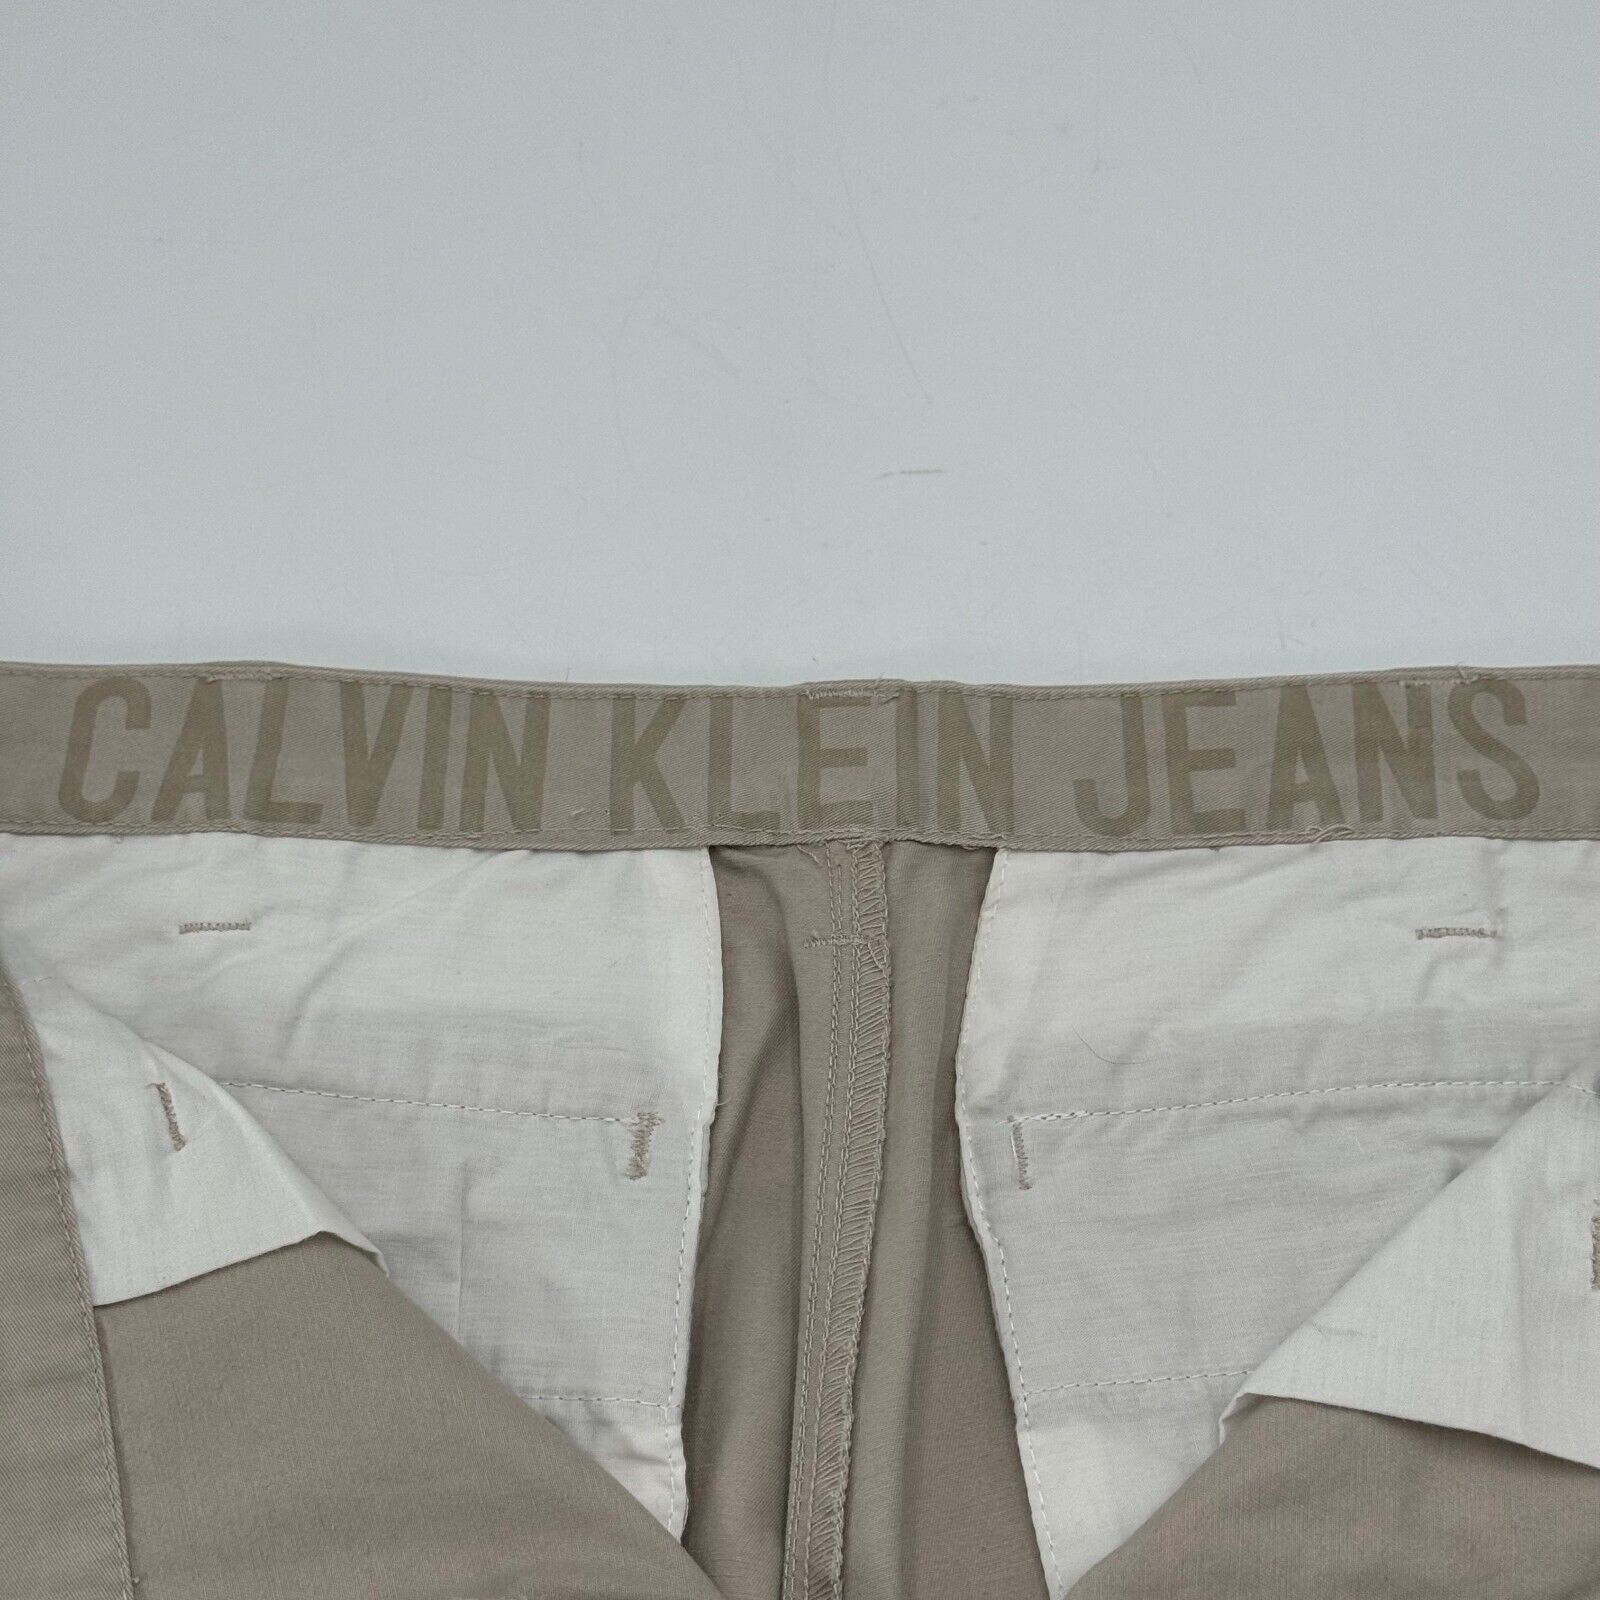 Calvin Klein Jeans Khaki Chino Tan Mens 36x32